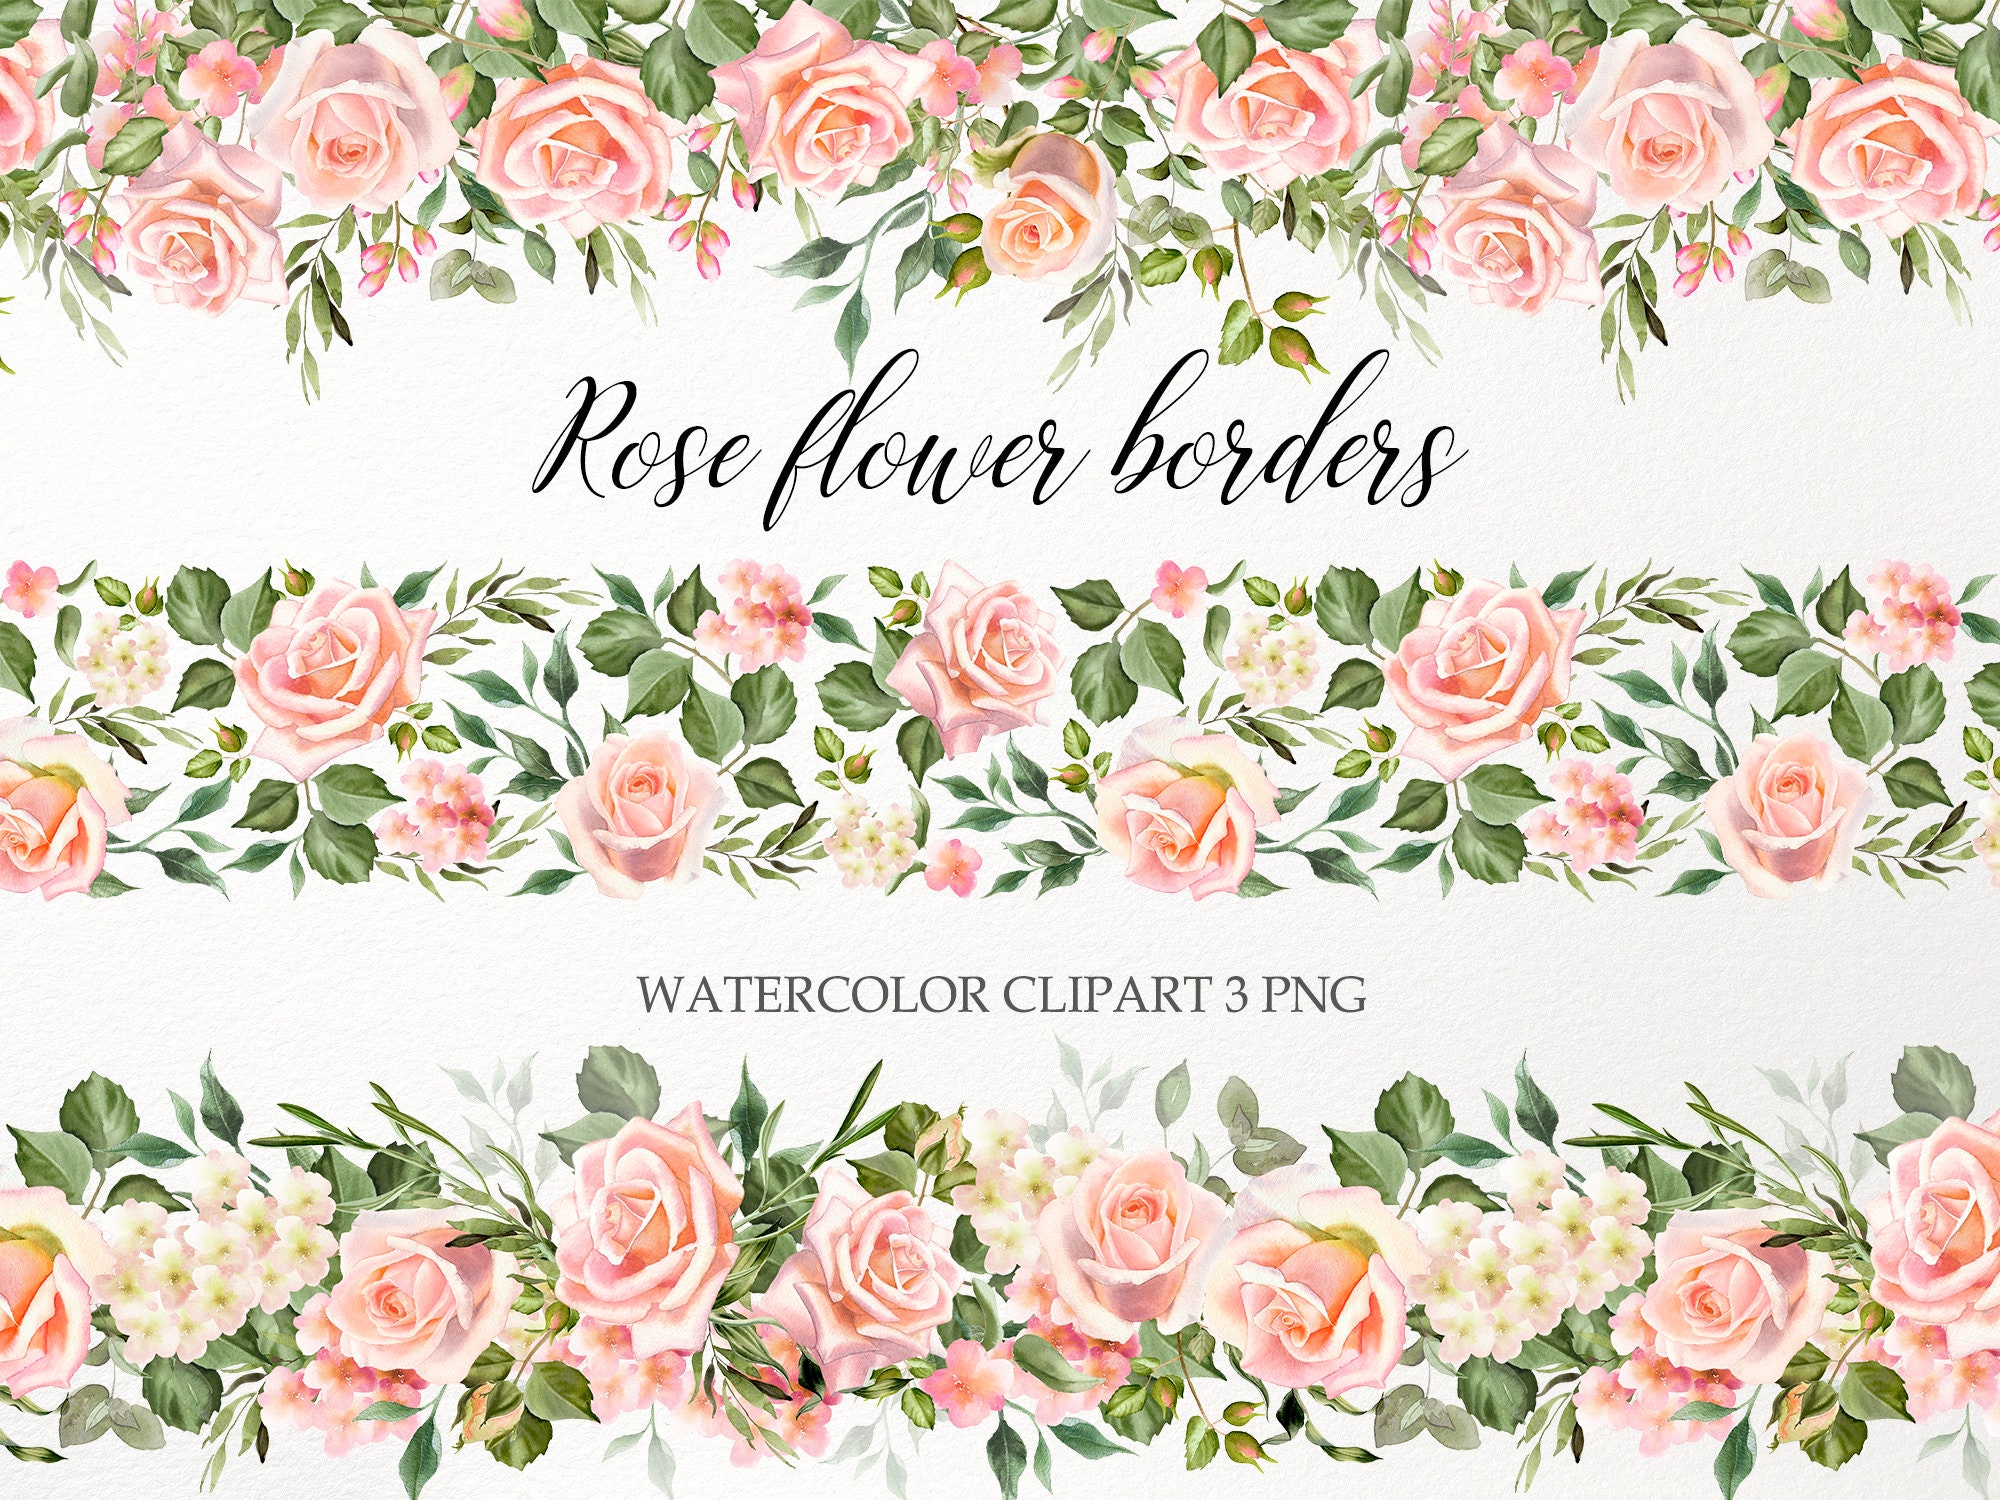 Golden Square Frame With Pink Roses Floral Design Wedding Monogram  Watercolor Illustrations Stock Illustration - Download Image Now - iStock